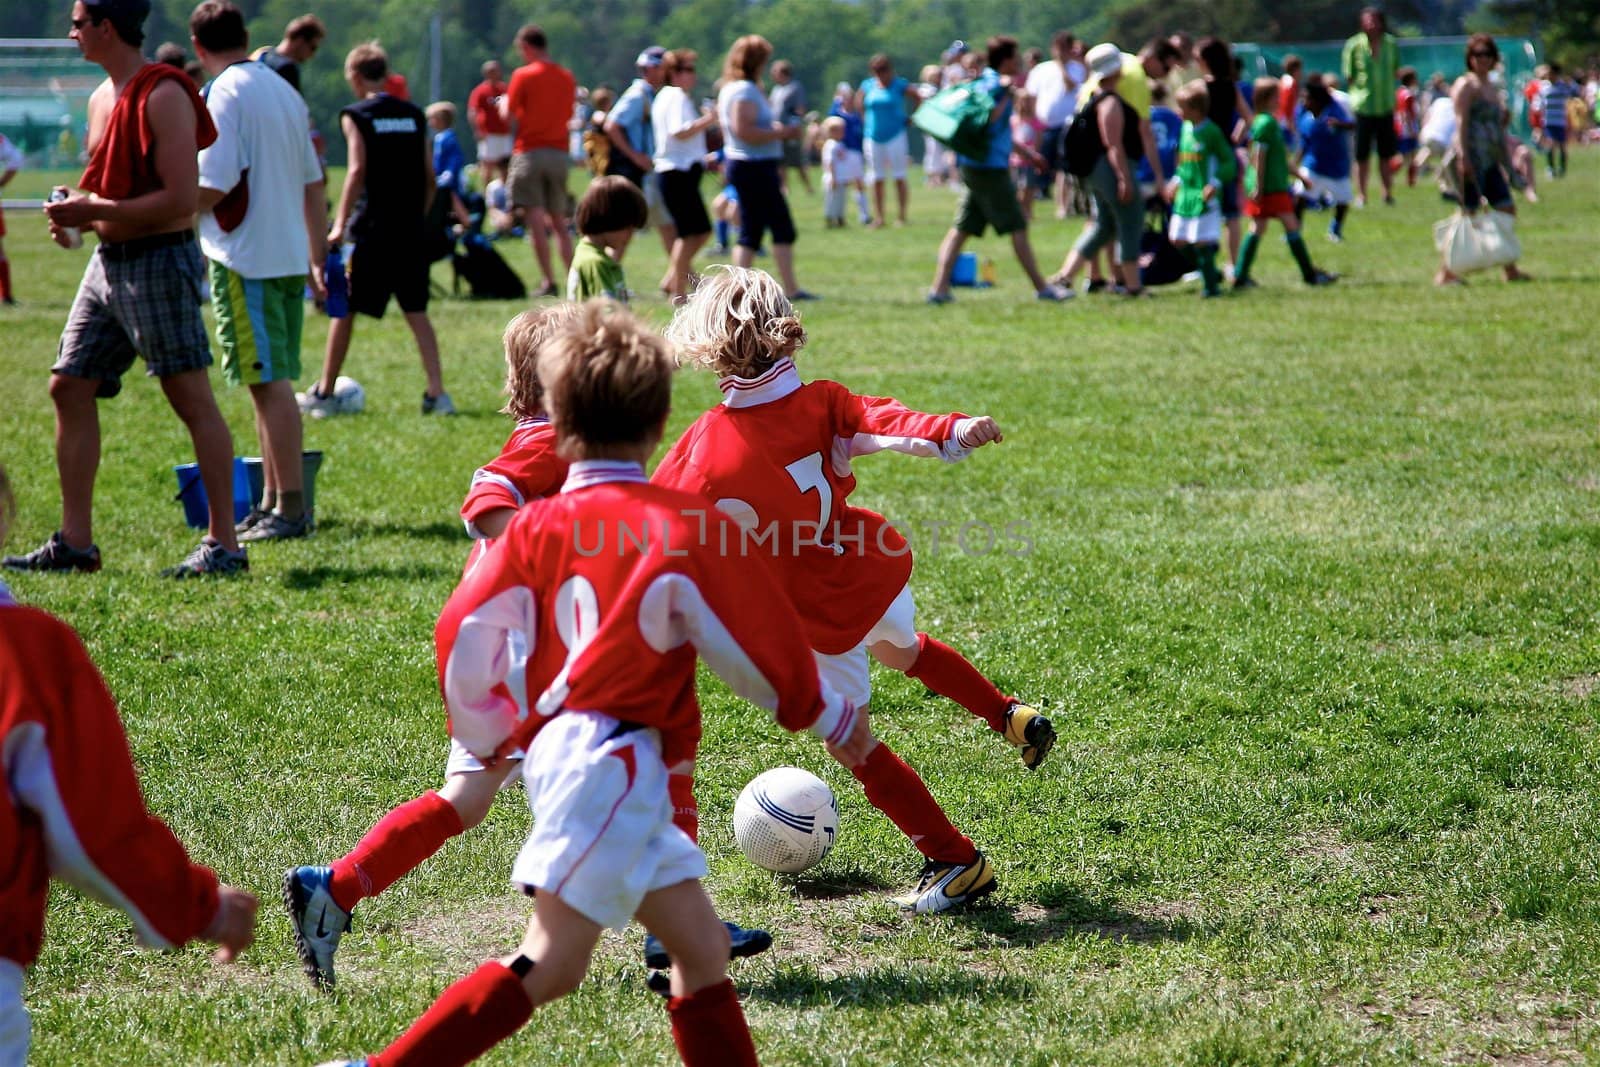 boys playing footballmatch by Bildehagen